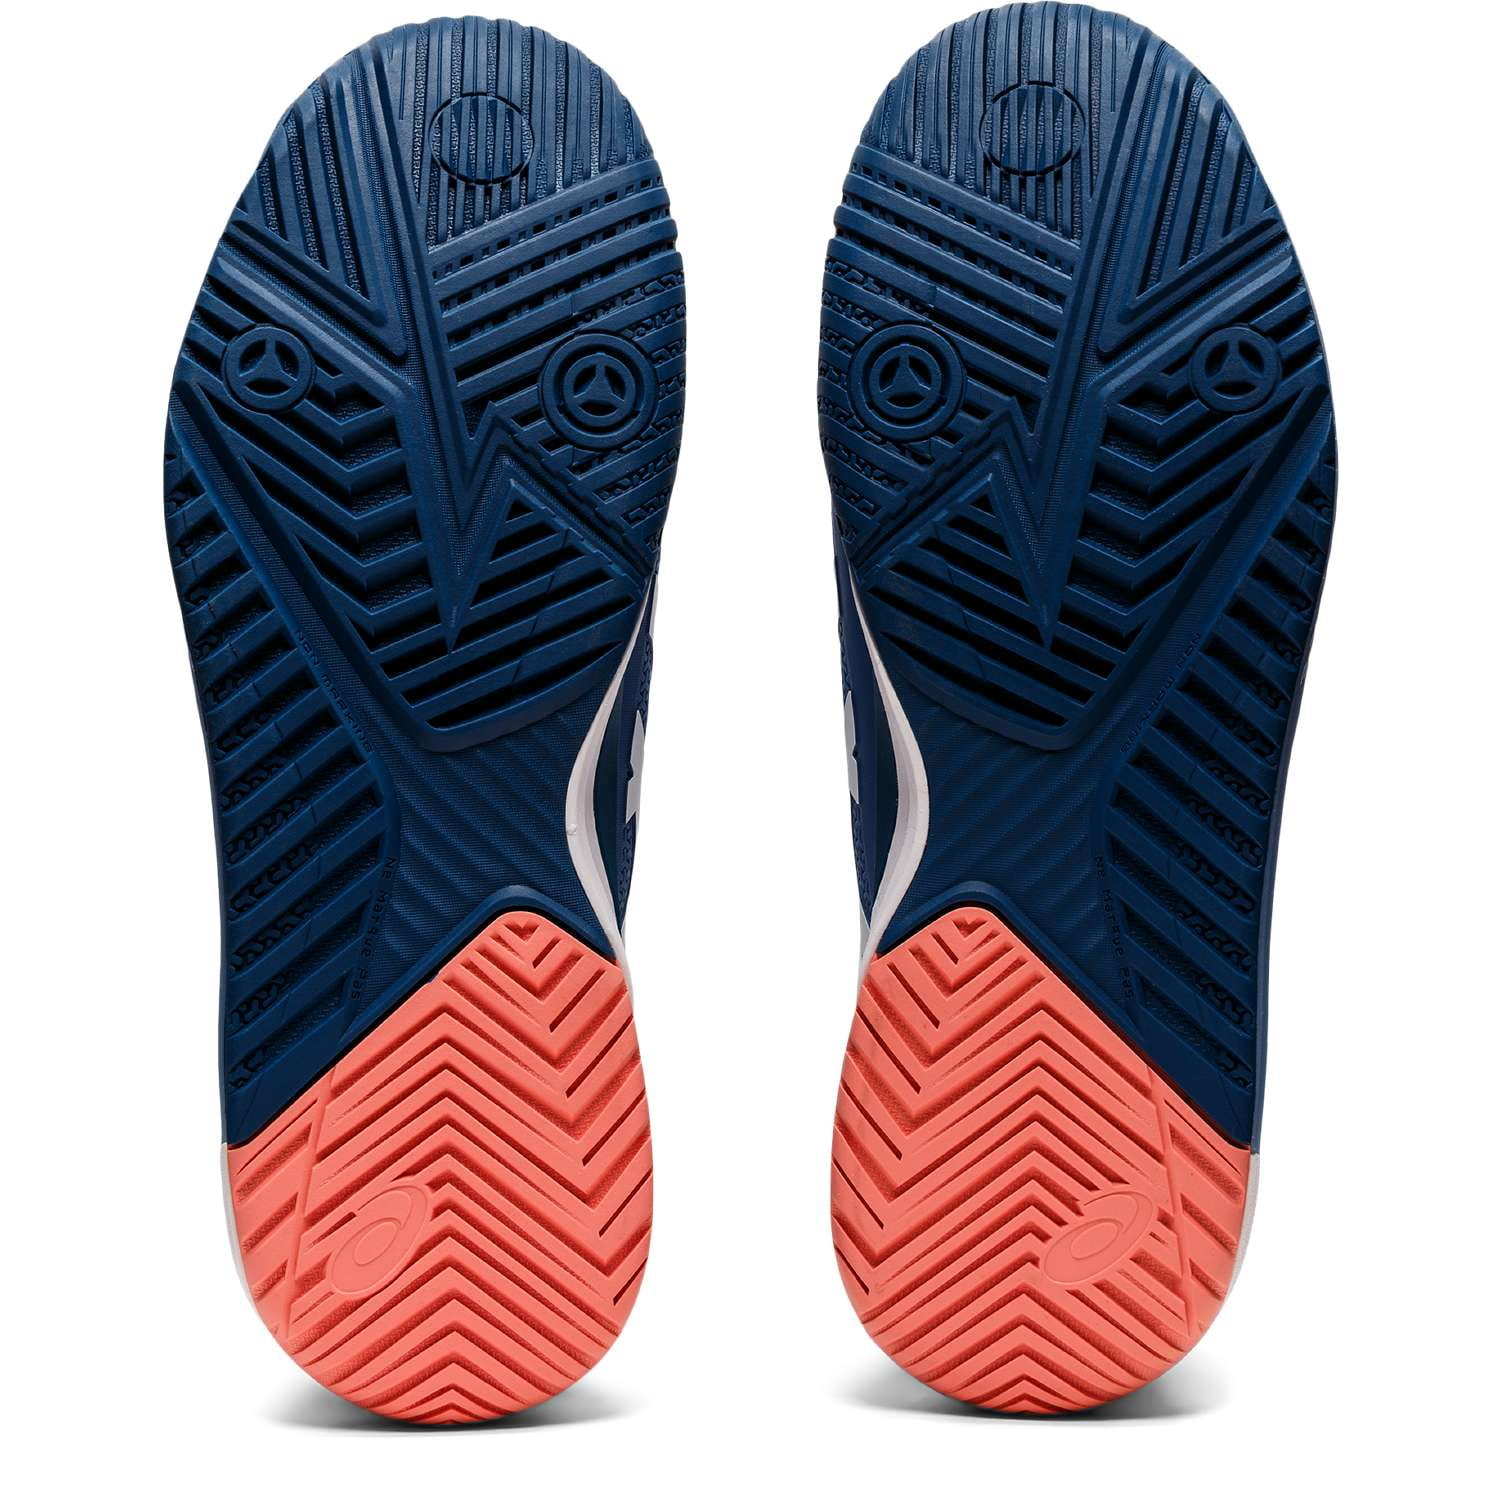 Asics Men's Gel-Resolution 8 Tennis Shoes In Blue Harmony/White - Tennis Shoes - Asics - ATR Sports